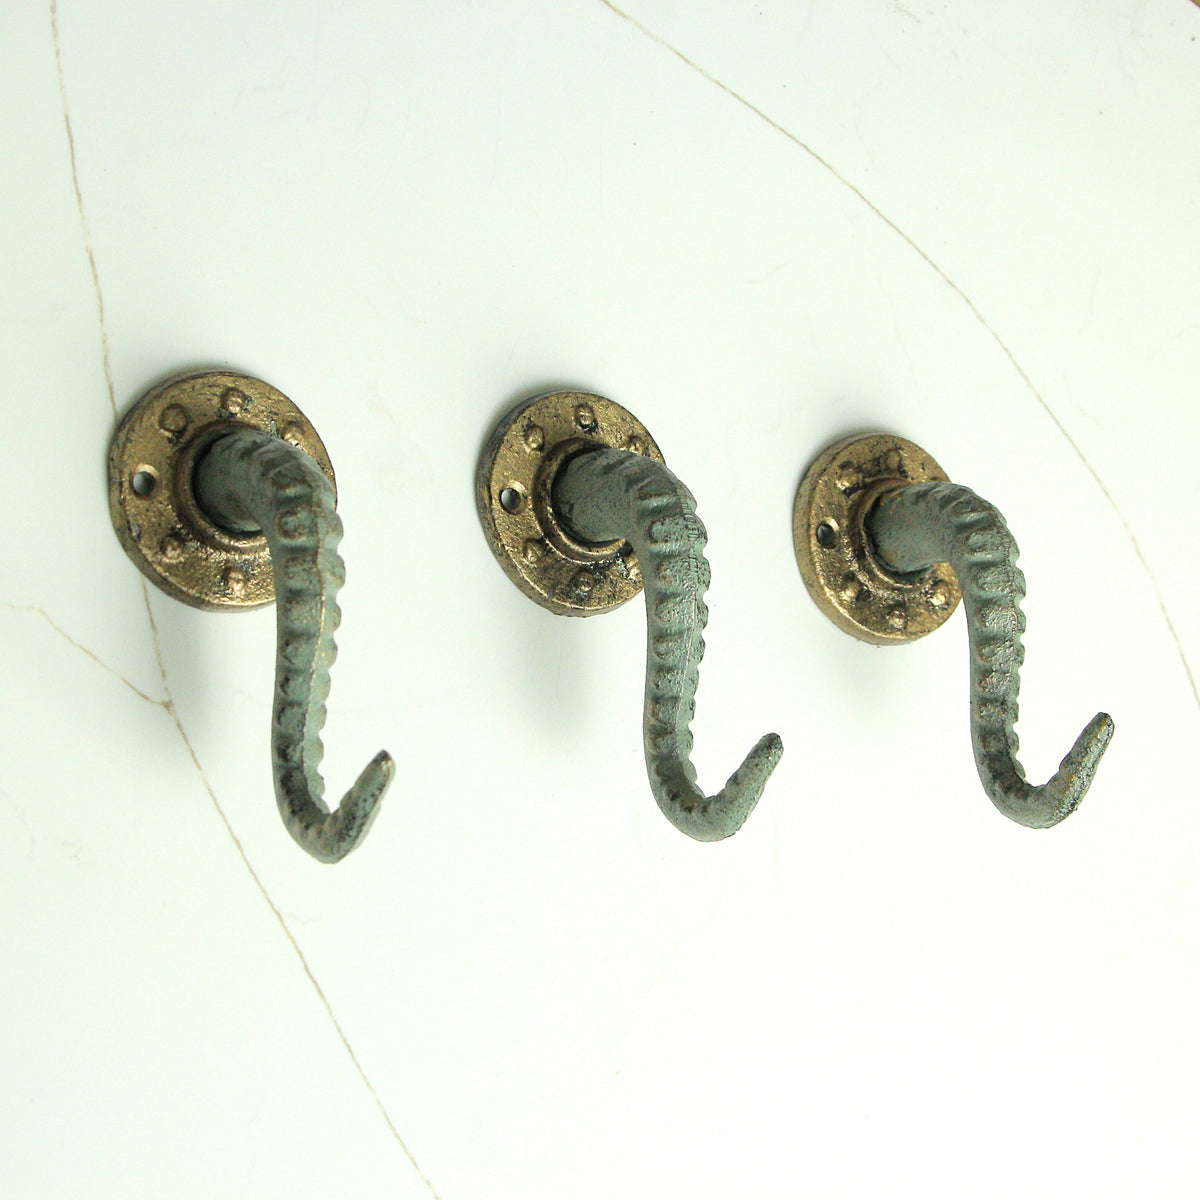 Coat Hooks for Wall Decorative Rustic Octopus Key Holder, Cast Iron 10 inch Key